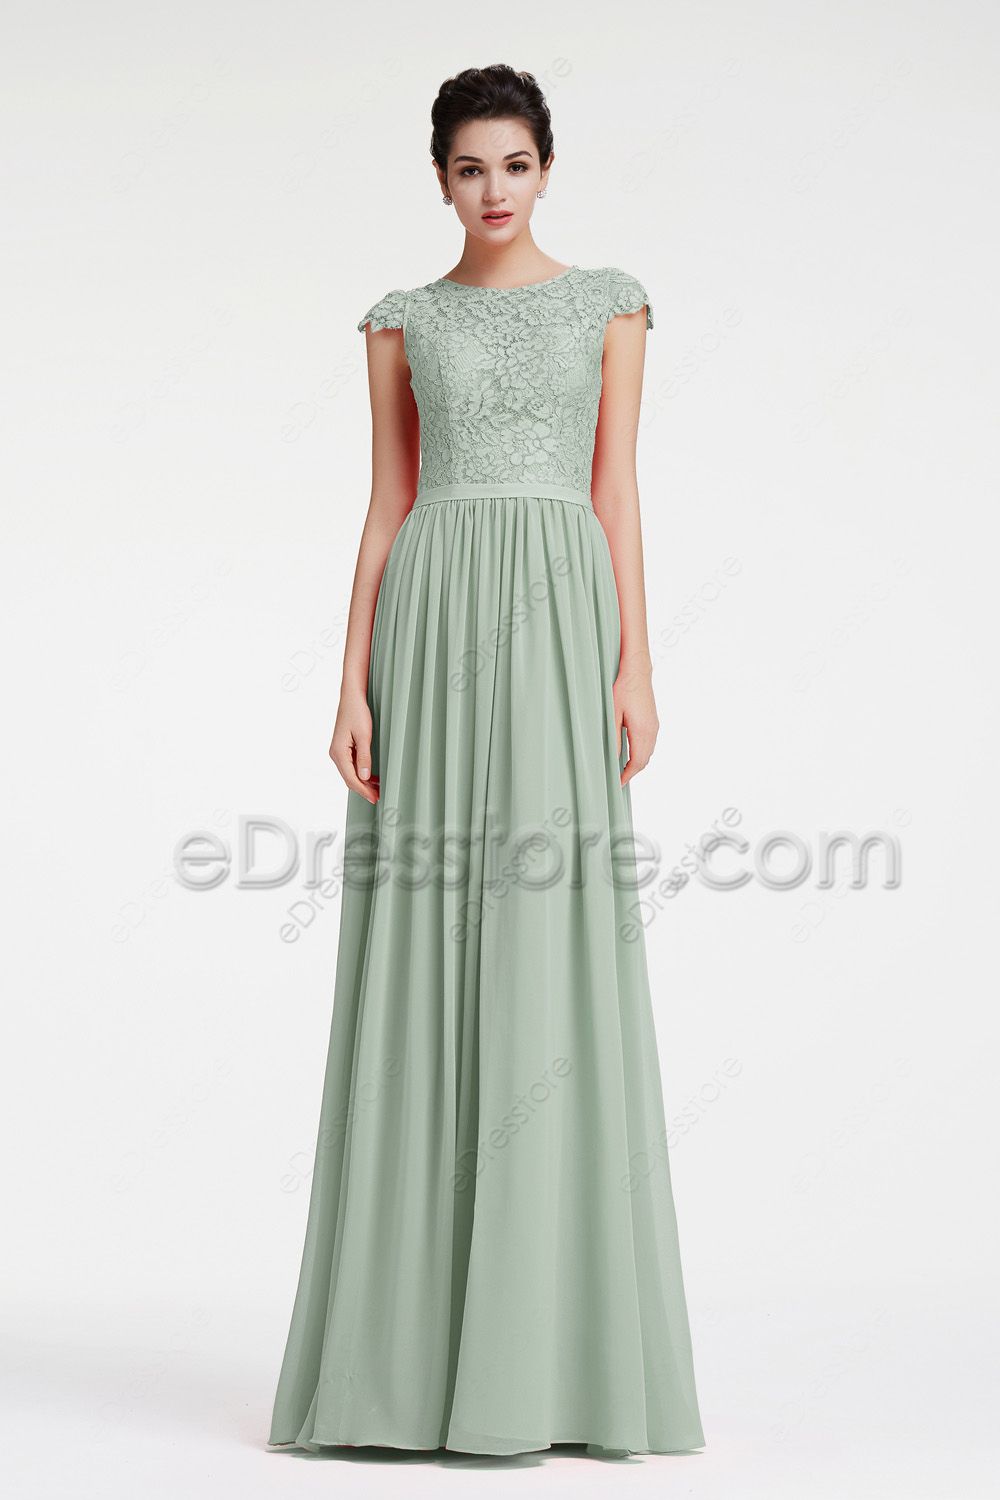 Modest Eucalyptus Green Lace Chiffon Bridesmaid Dresses | eDresstore